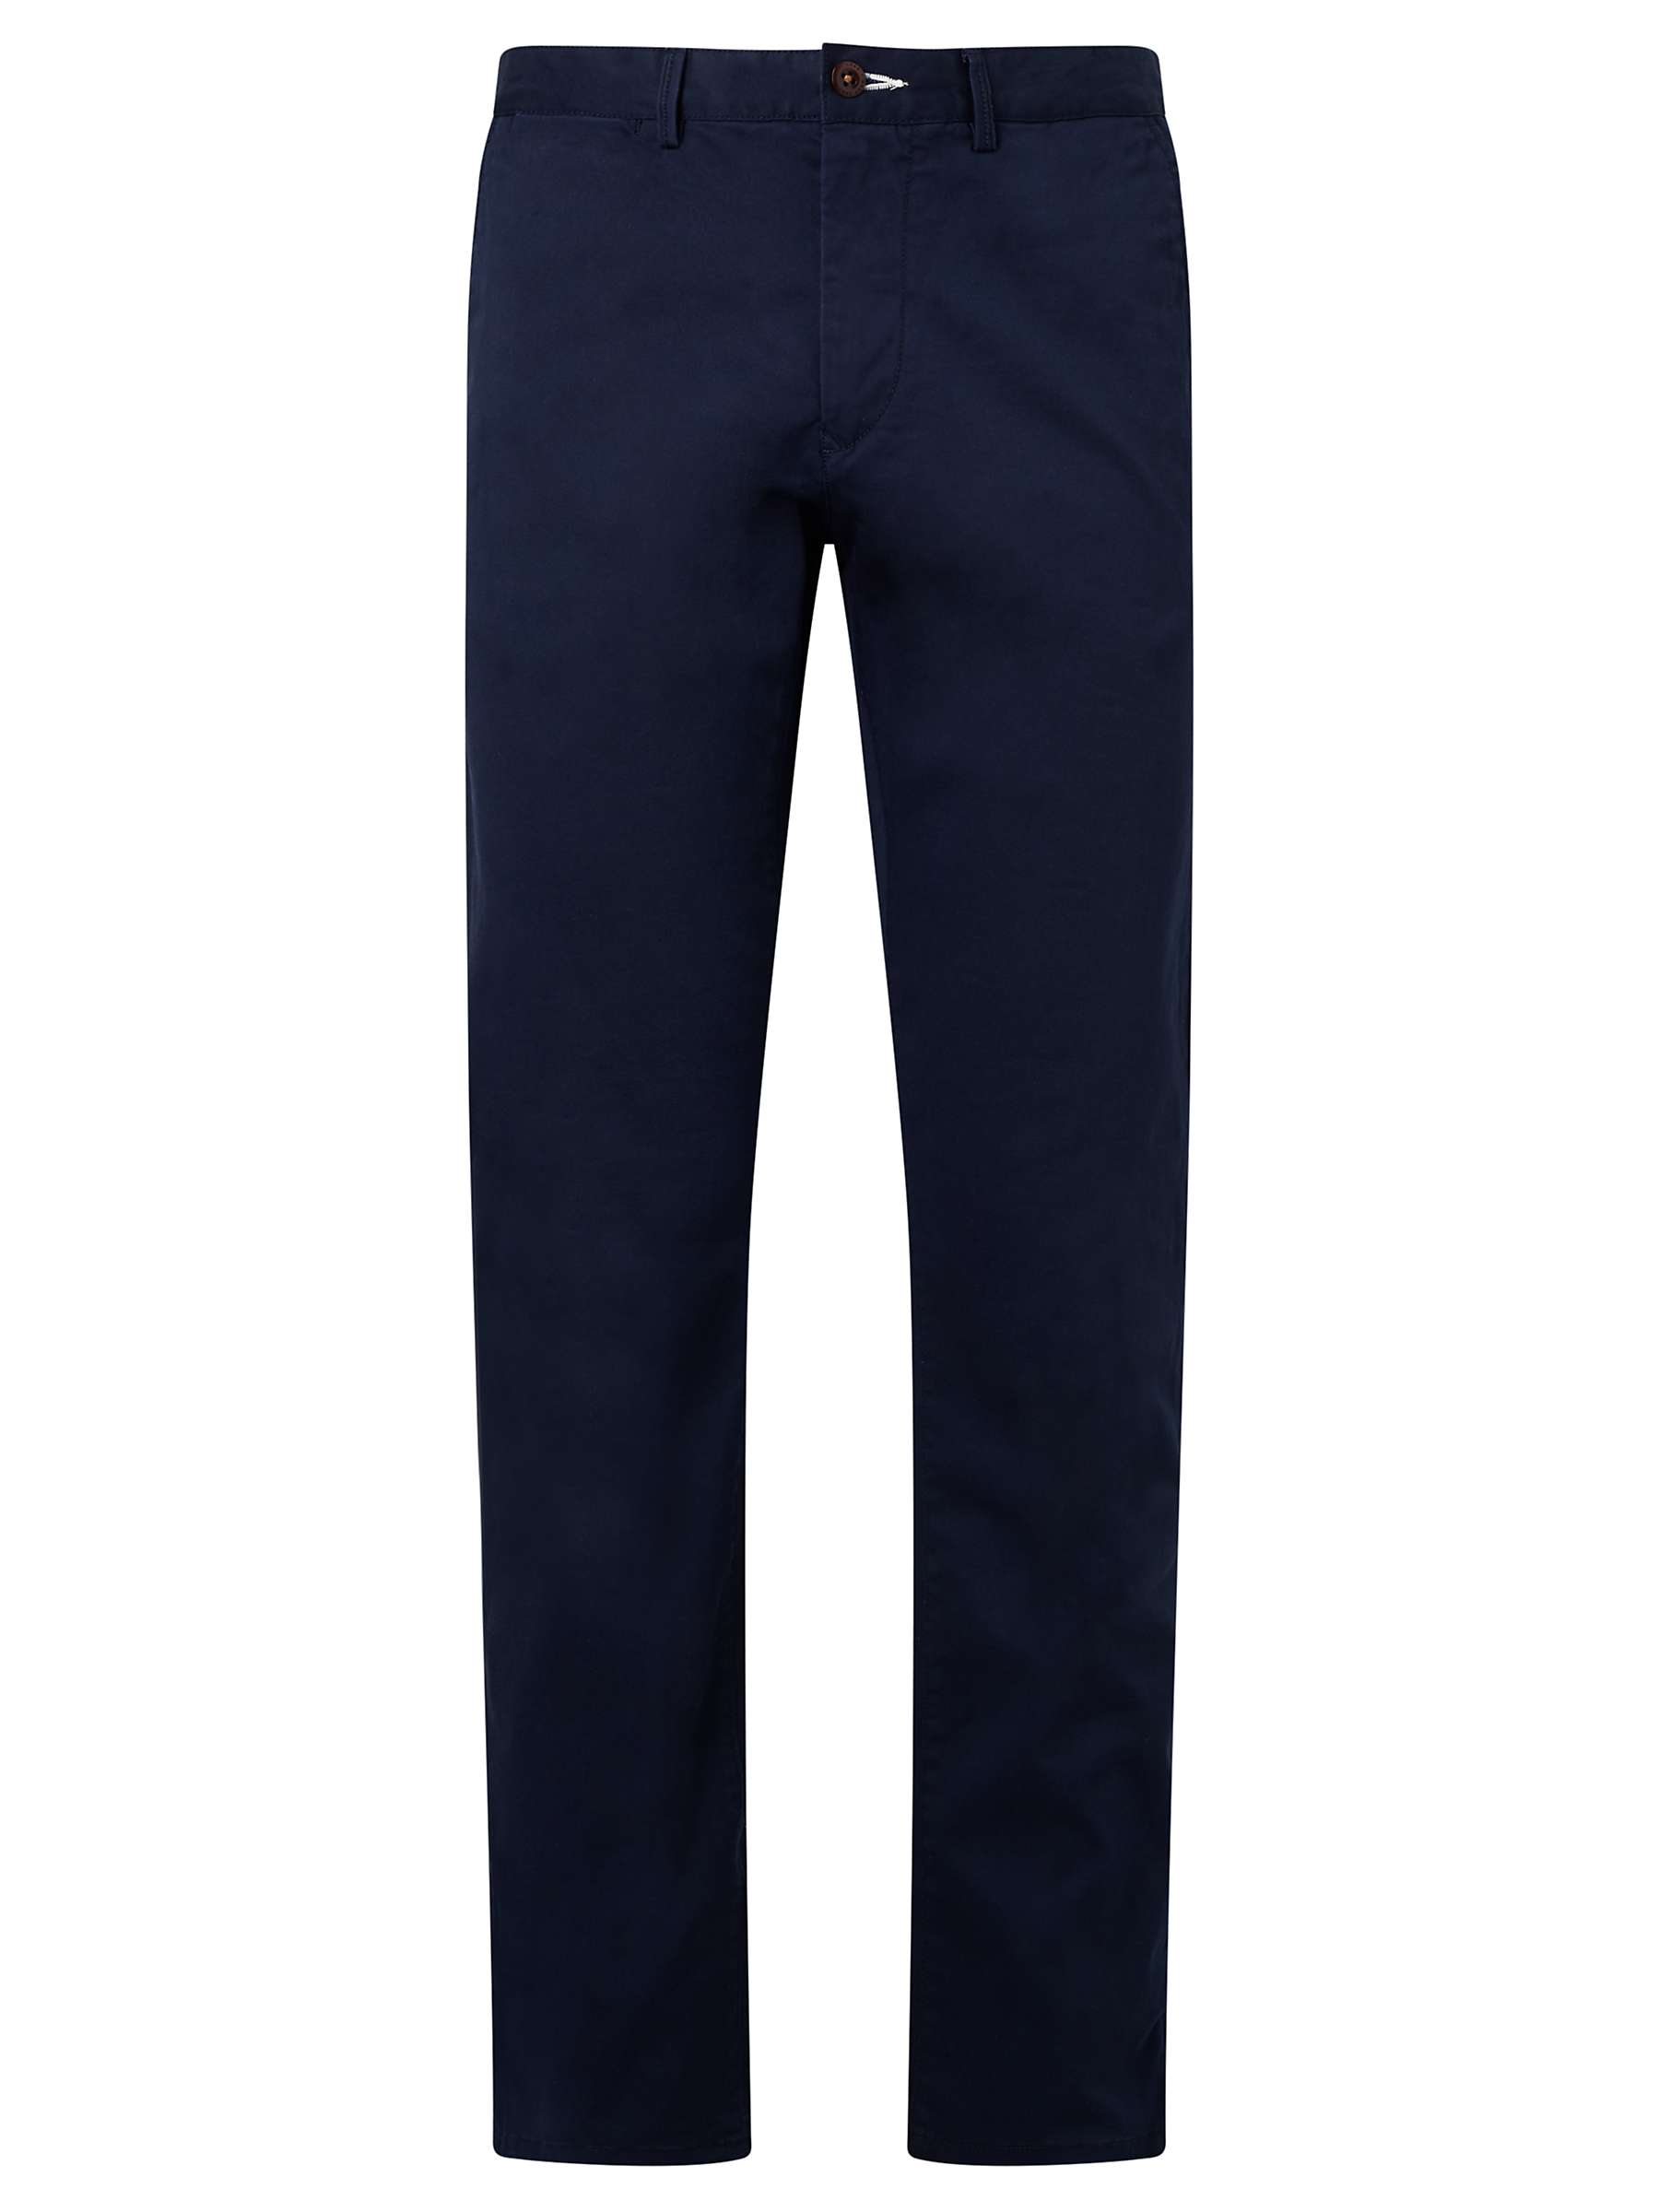 GANT Regular Twill Chino Trousers, Navy at John Lewis & Partners